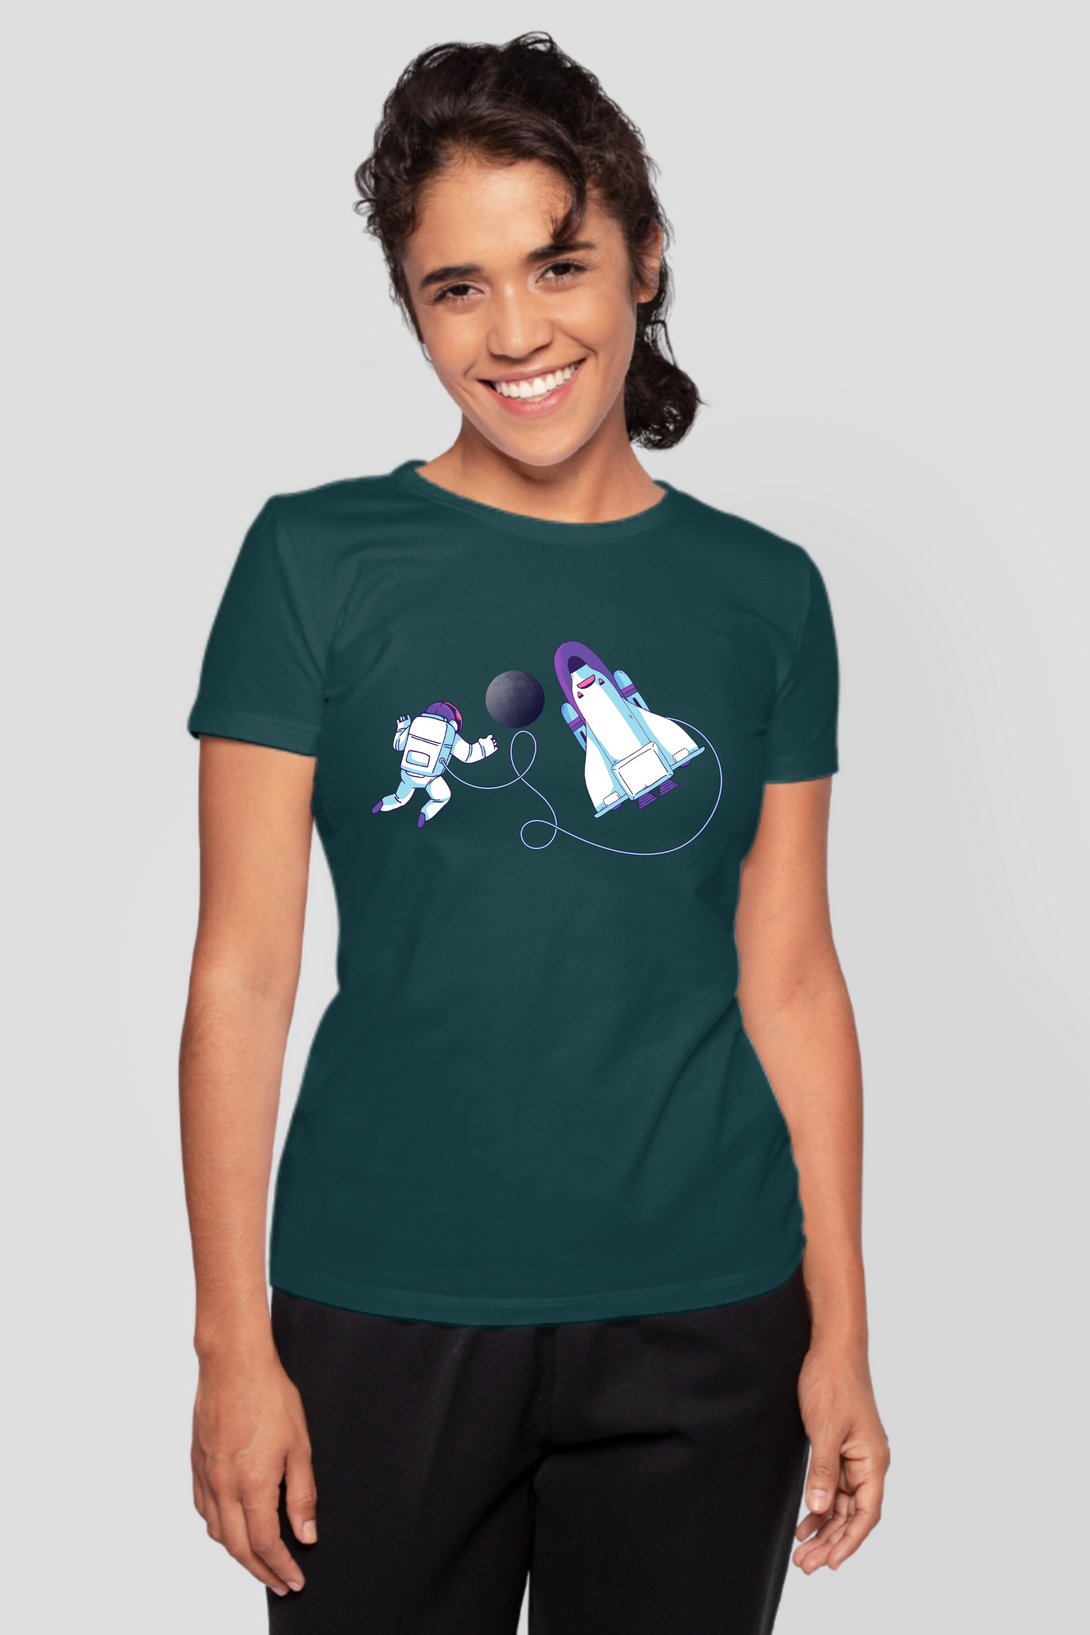 Cosmic Spacewalk Printed T-Shirt For Women - WowWaves - 11